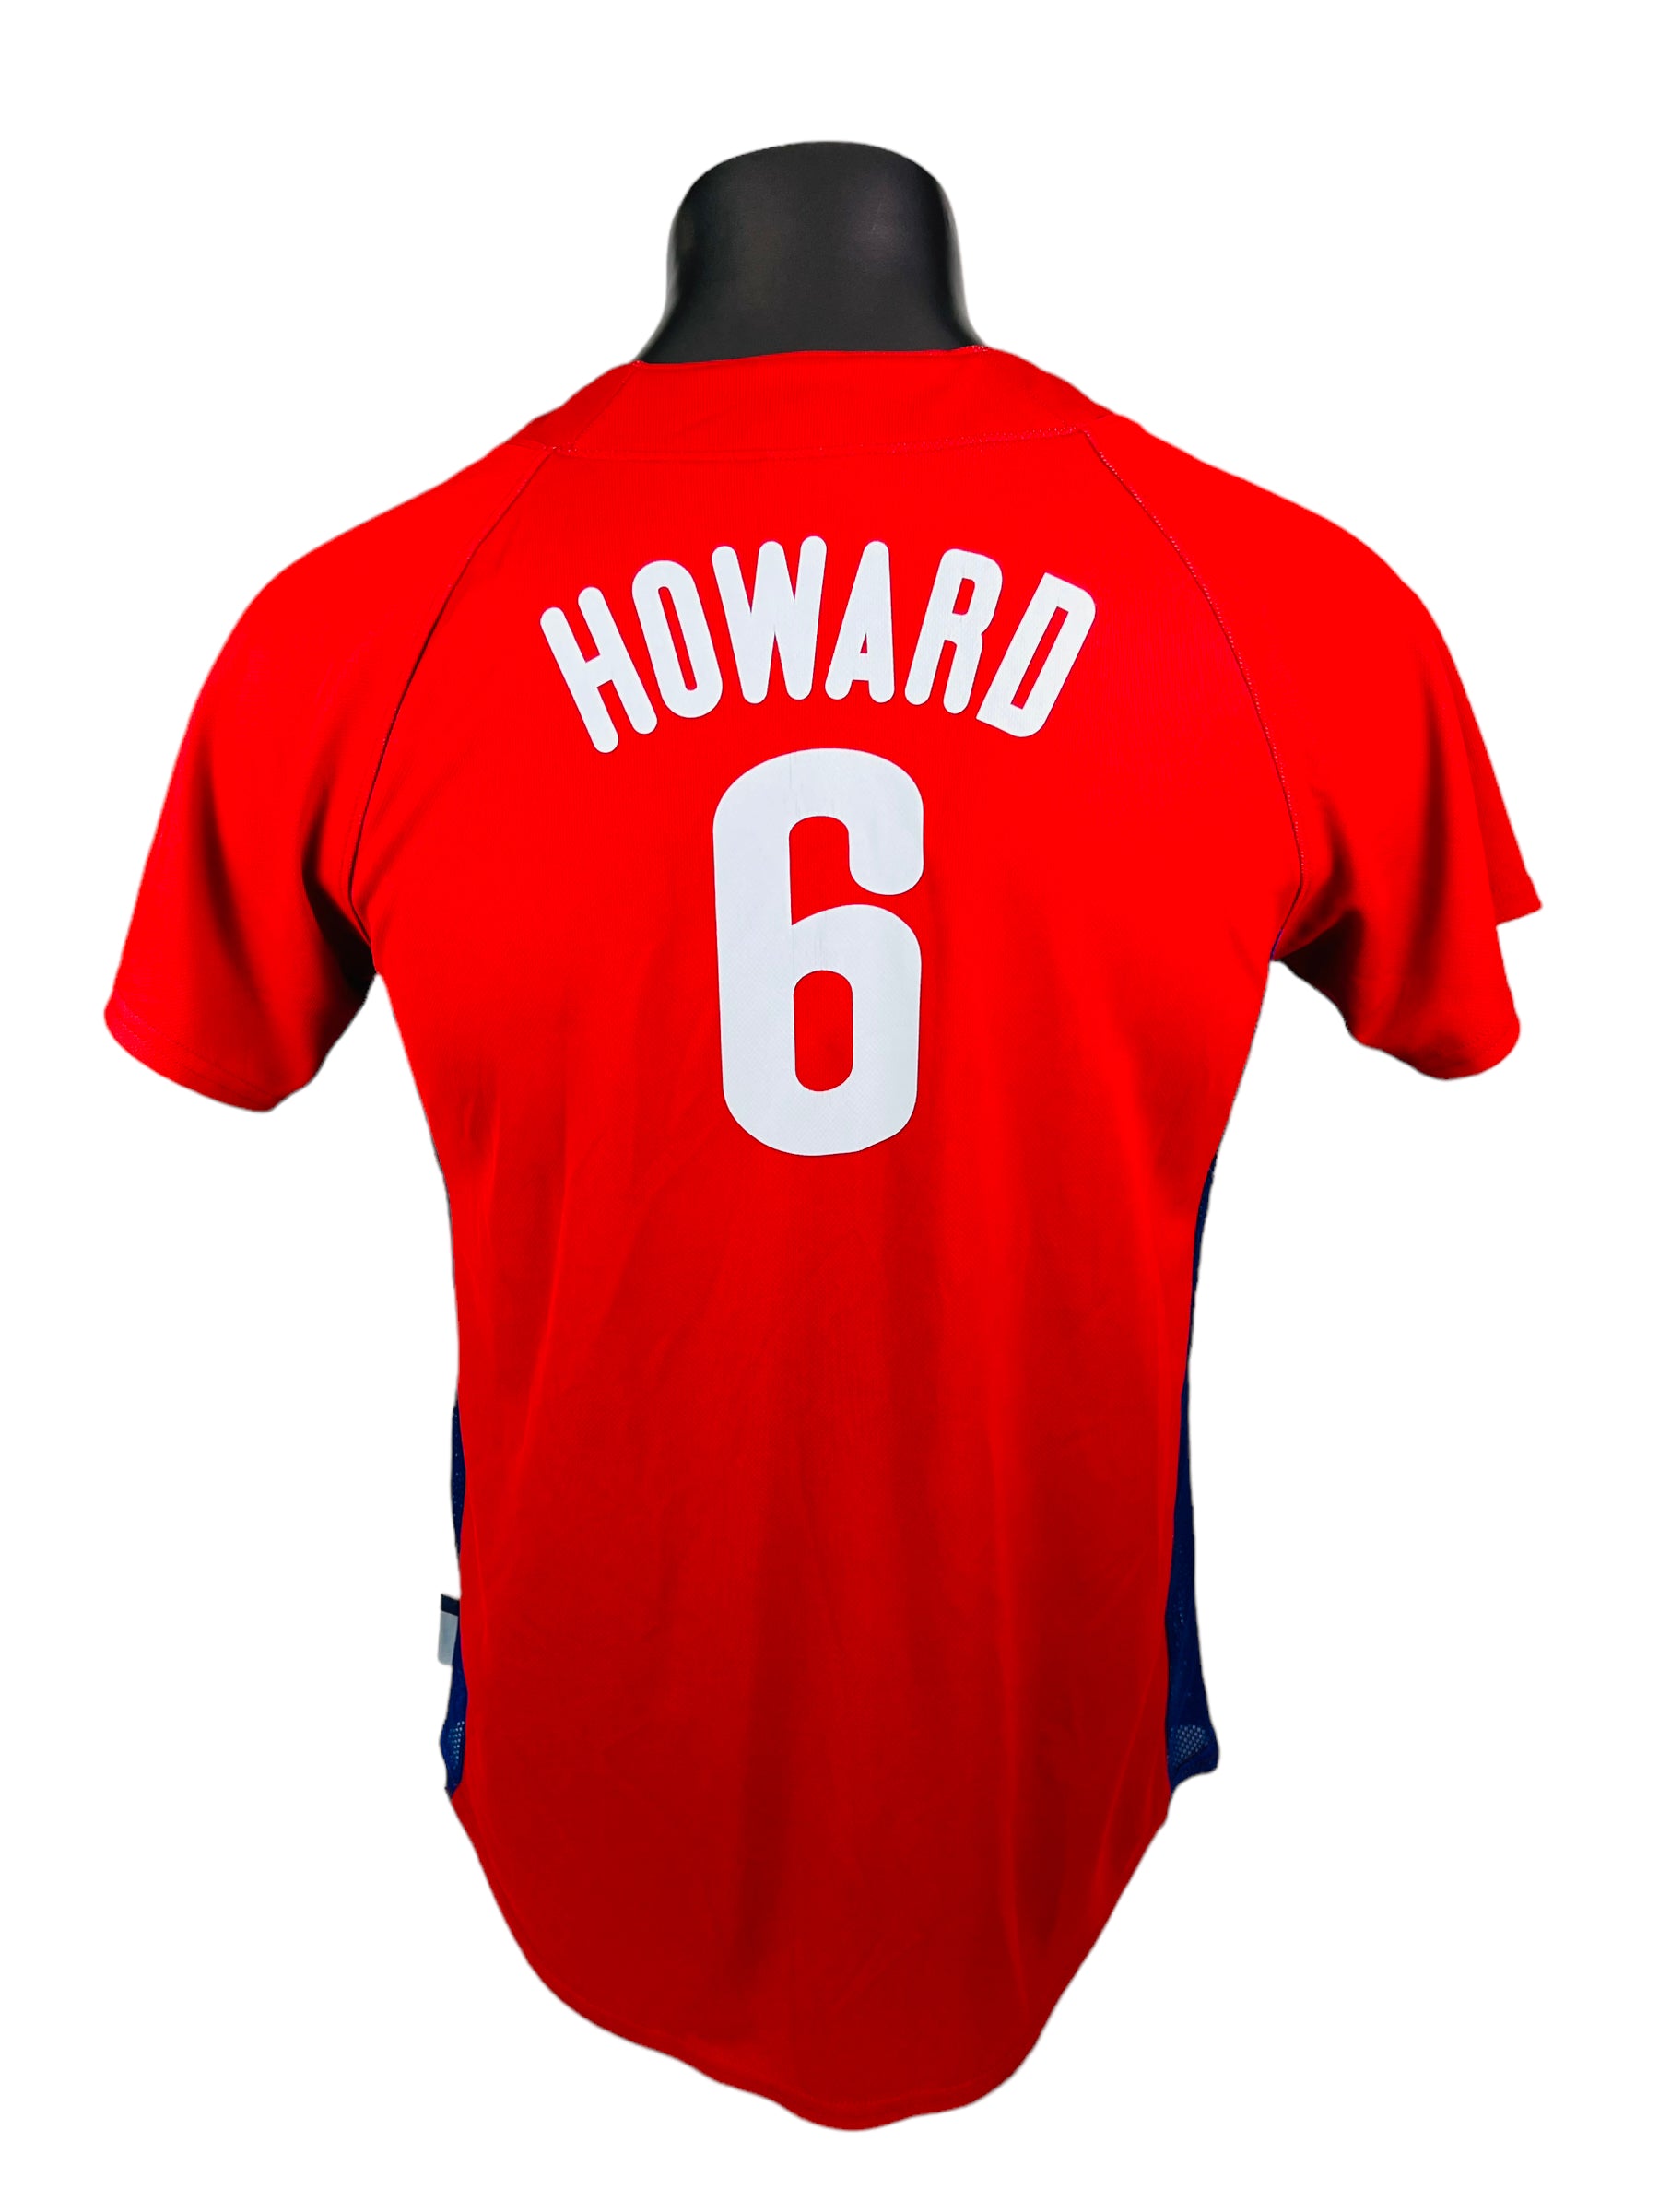 Ryan Howard Jersey, Authentic Phillies Ryan Howard Jerseys & Uniform -  Phillies Store